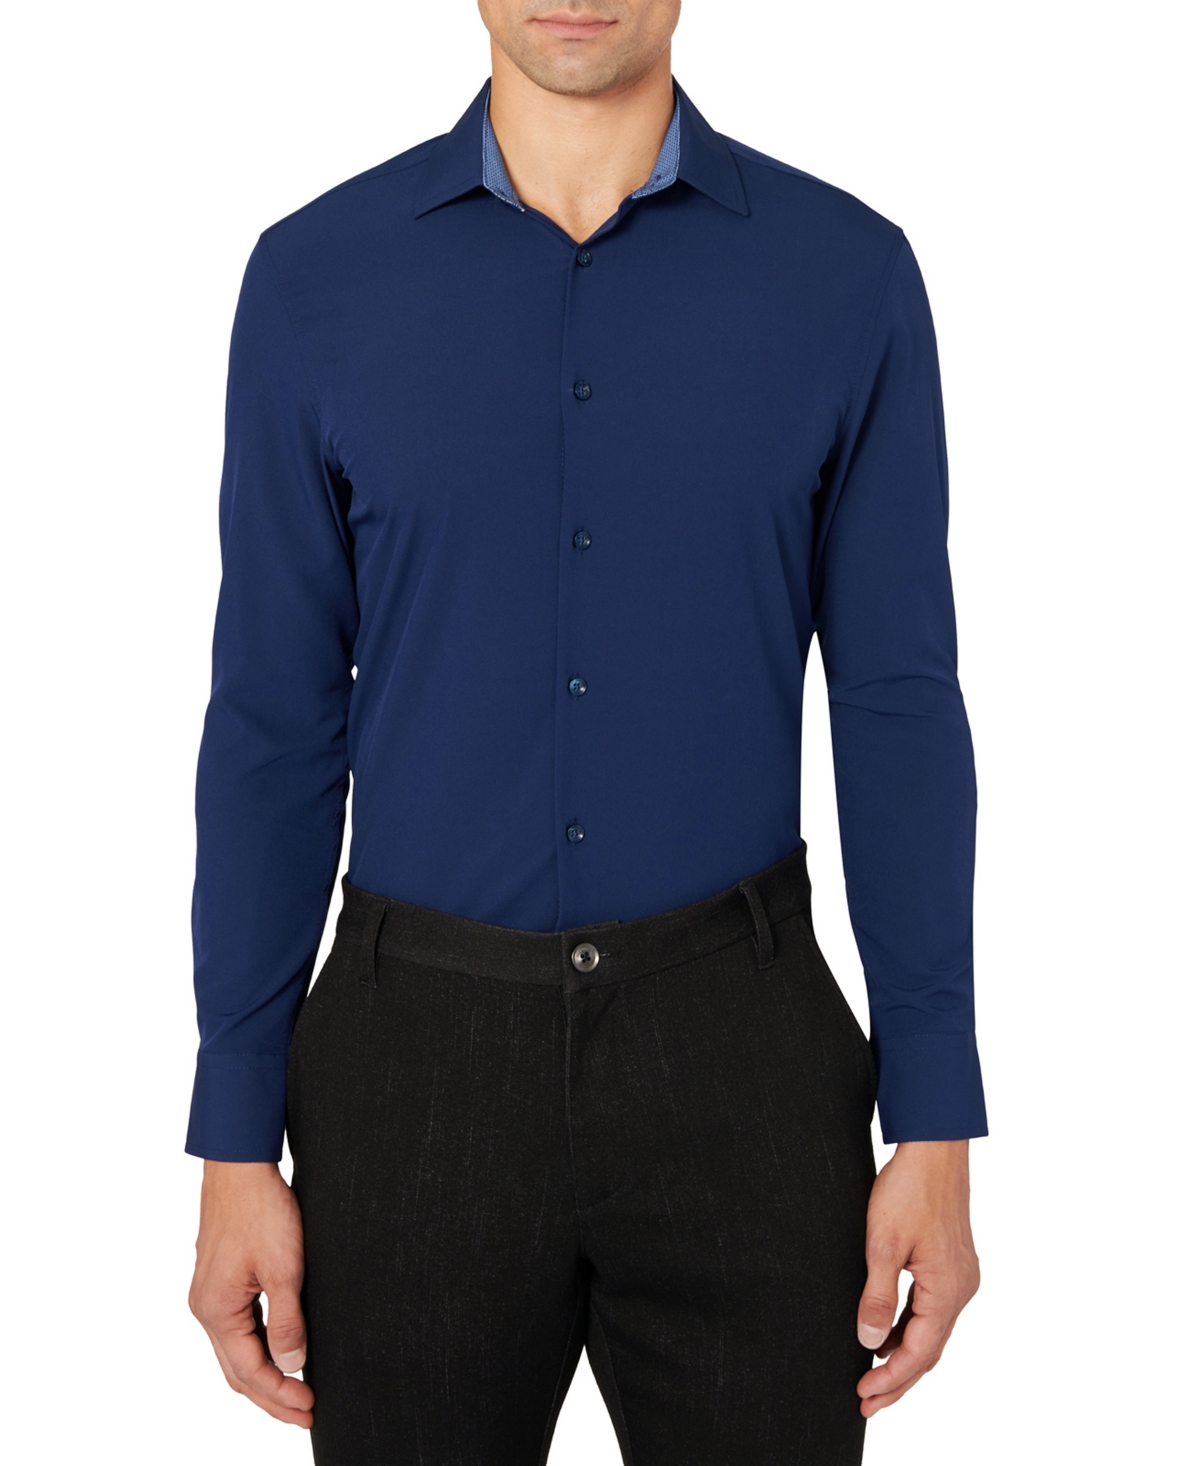 ConStruct Men's Slim-Fit Solid Performance Stretch Cooling Comfort Dress Shirt